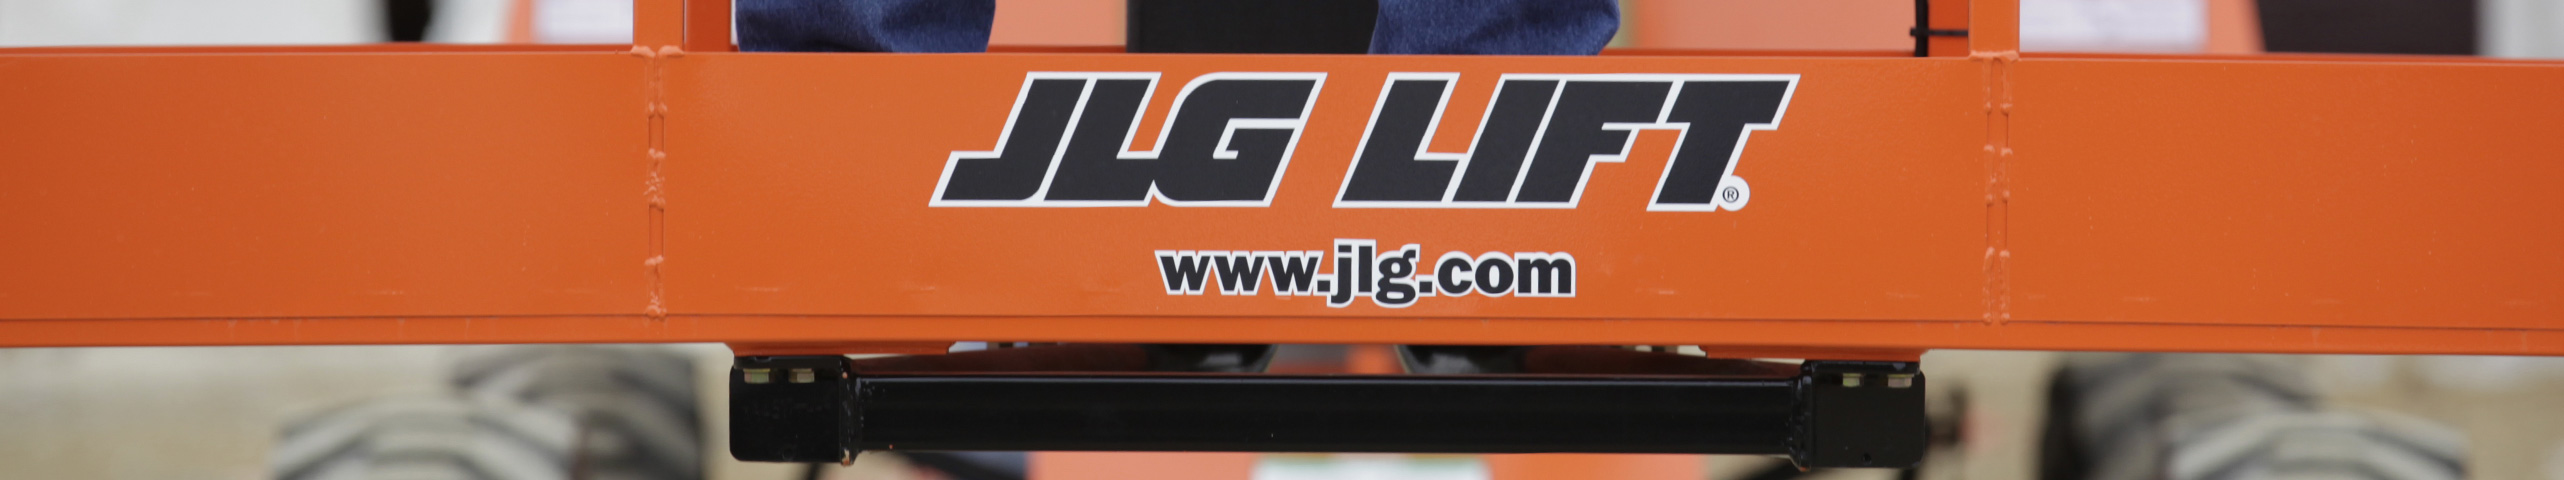 JLG Header Image